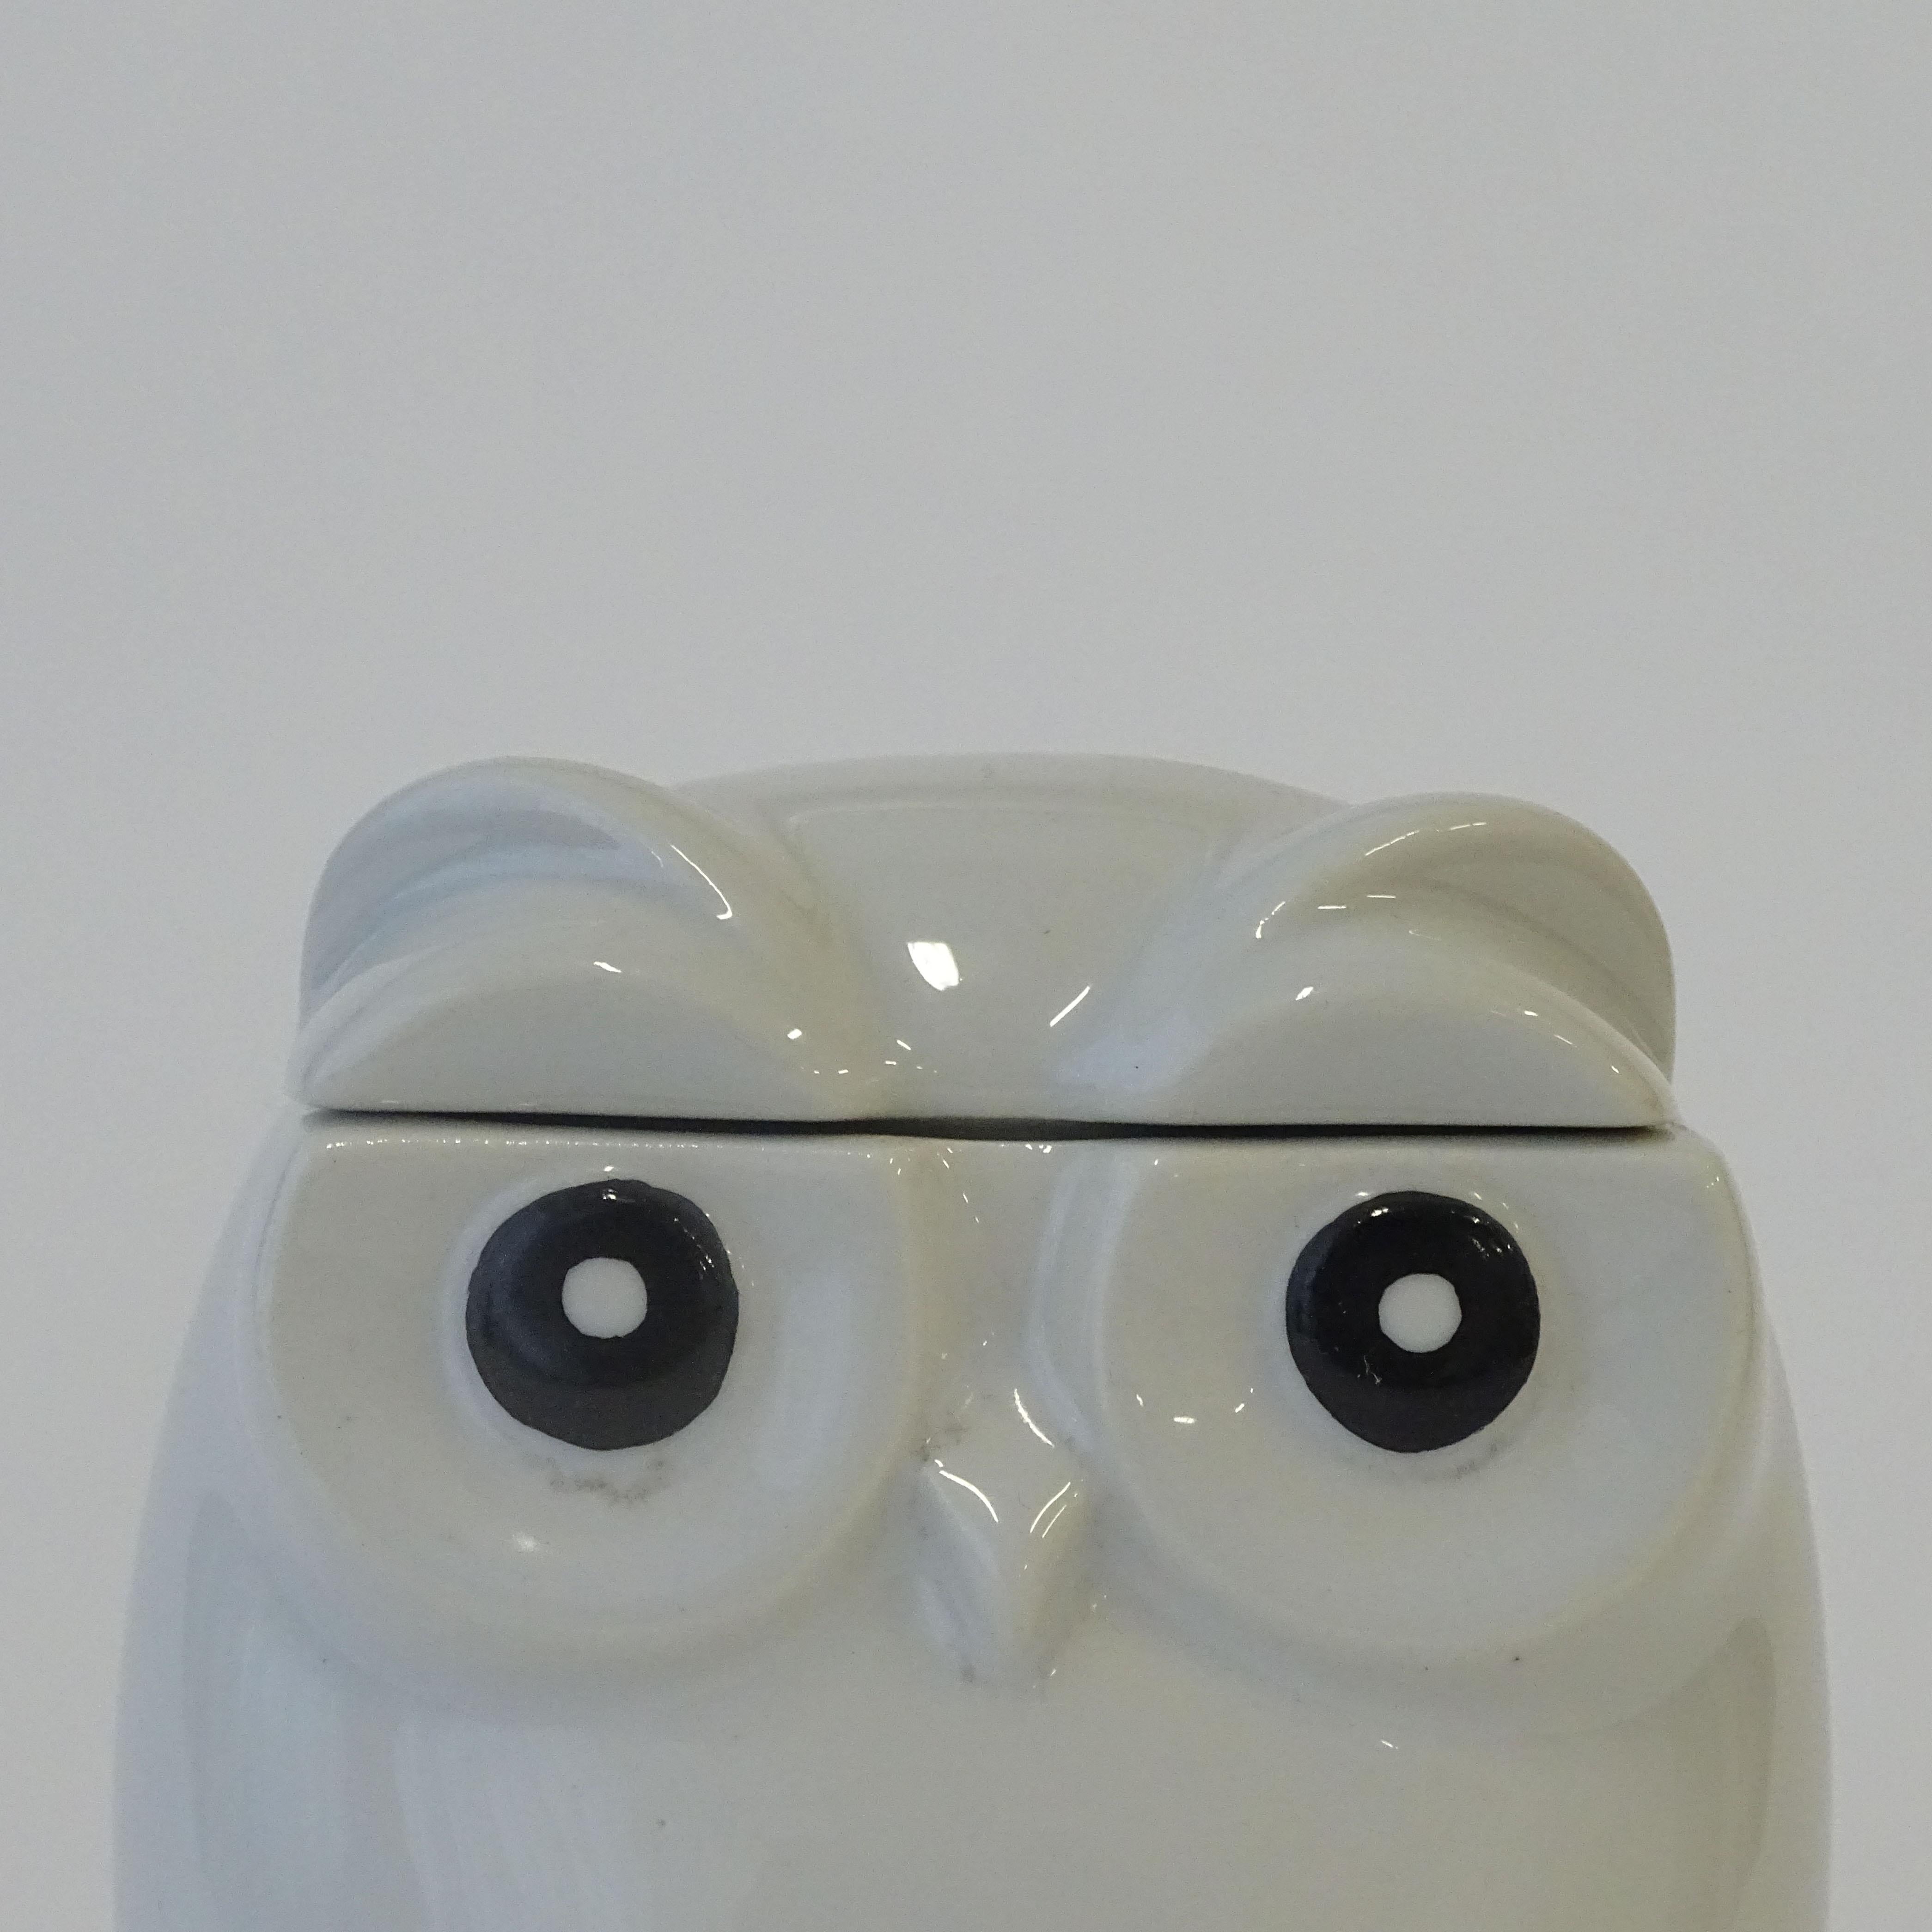 Piero Fornasetti ceramic Owl Box, Italy 1950s
Signed Fornasetti
Rare undecorated owl box.